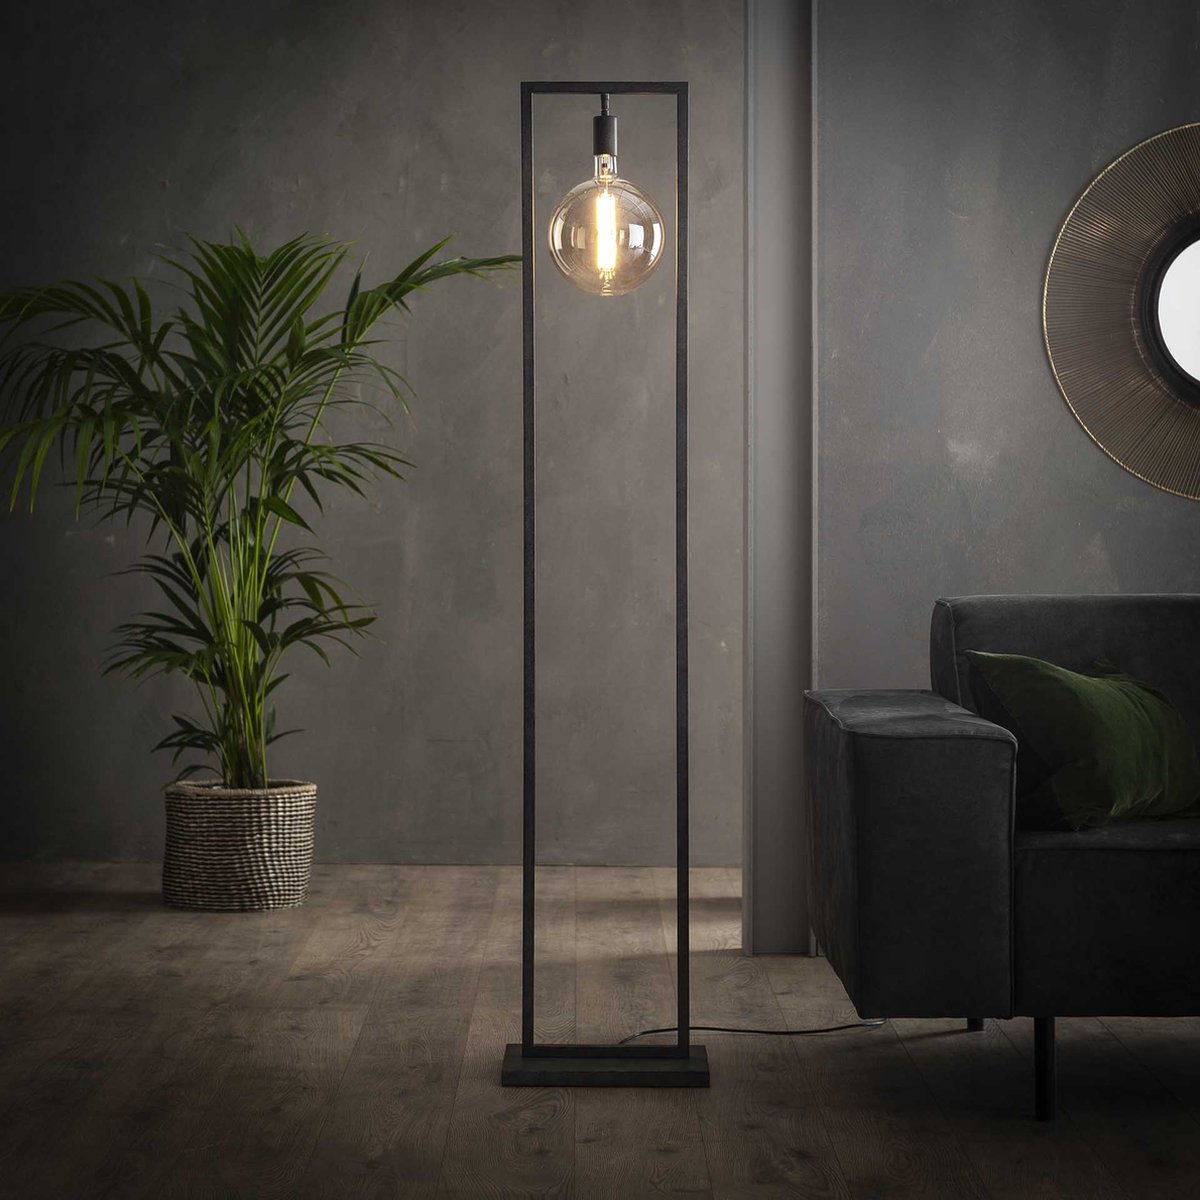 Vloerlamp Sky rechthoekig frame | 1 lichts | 166 cm | grijs | woonkamer | staande lamp | modern design